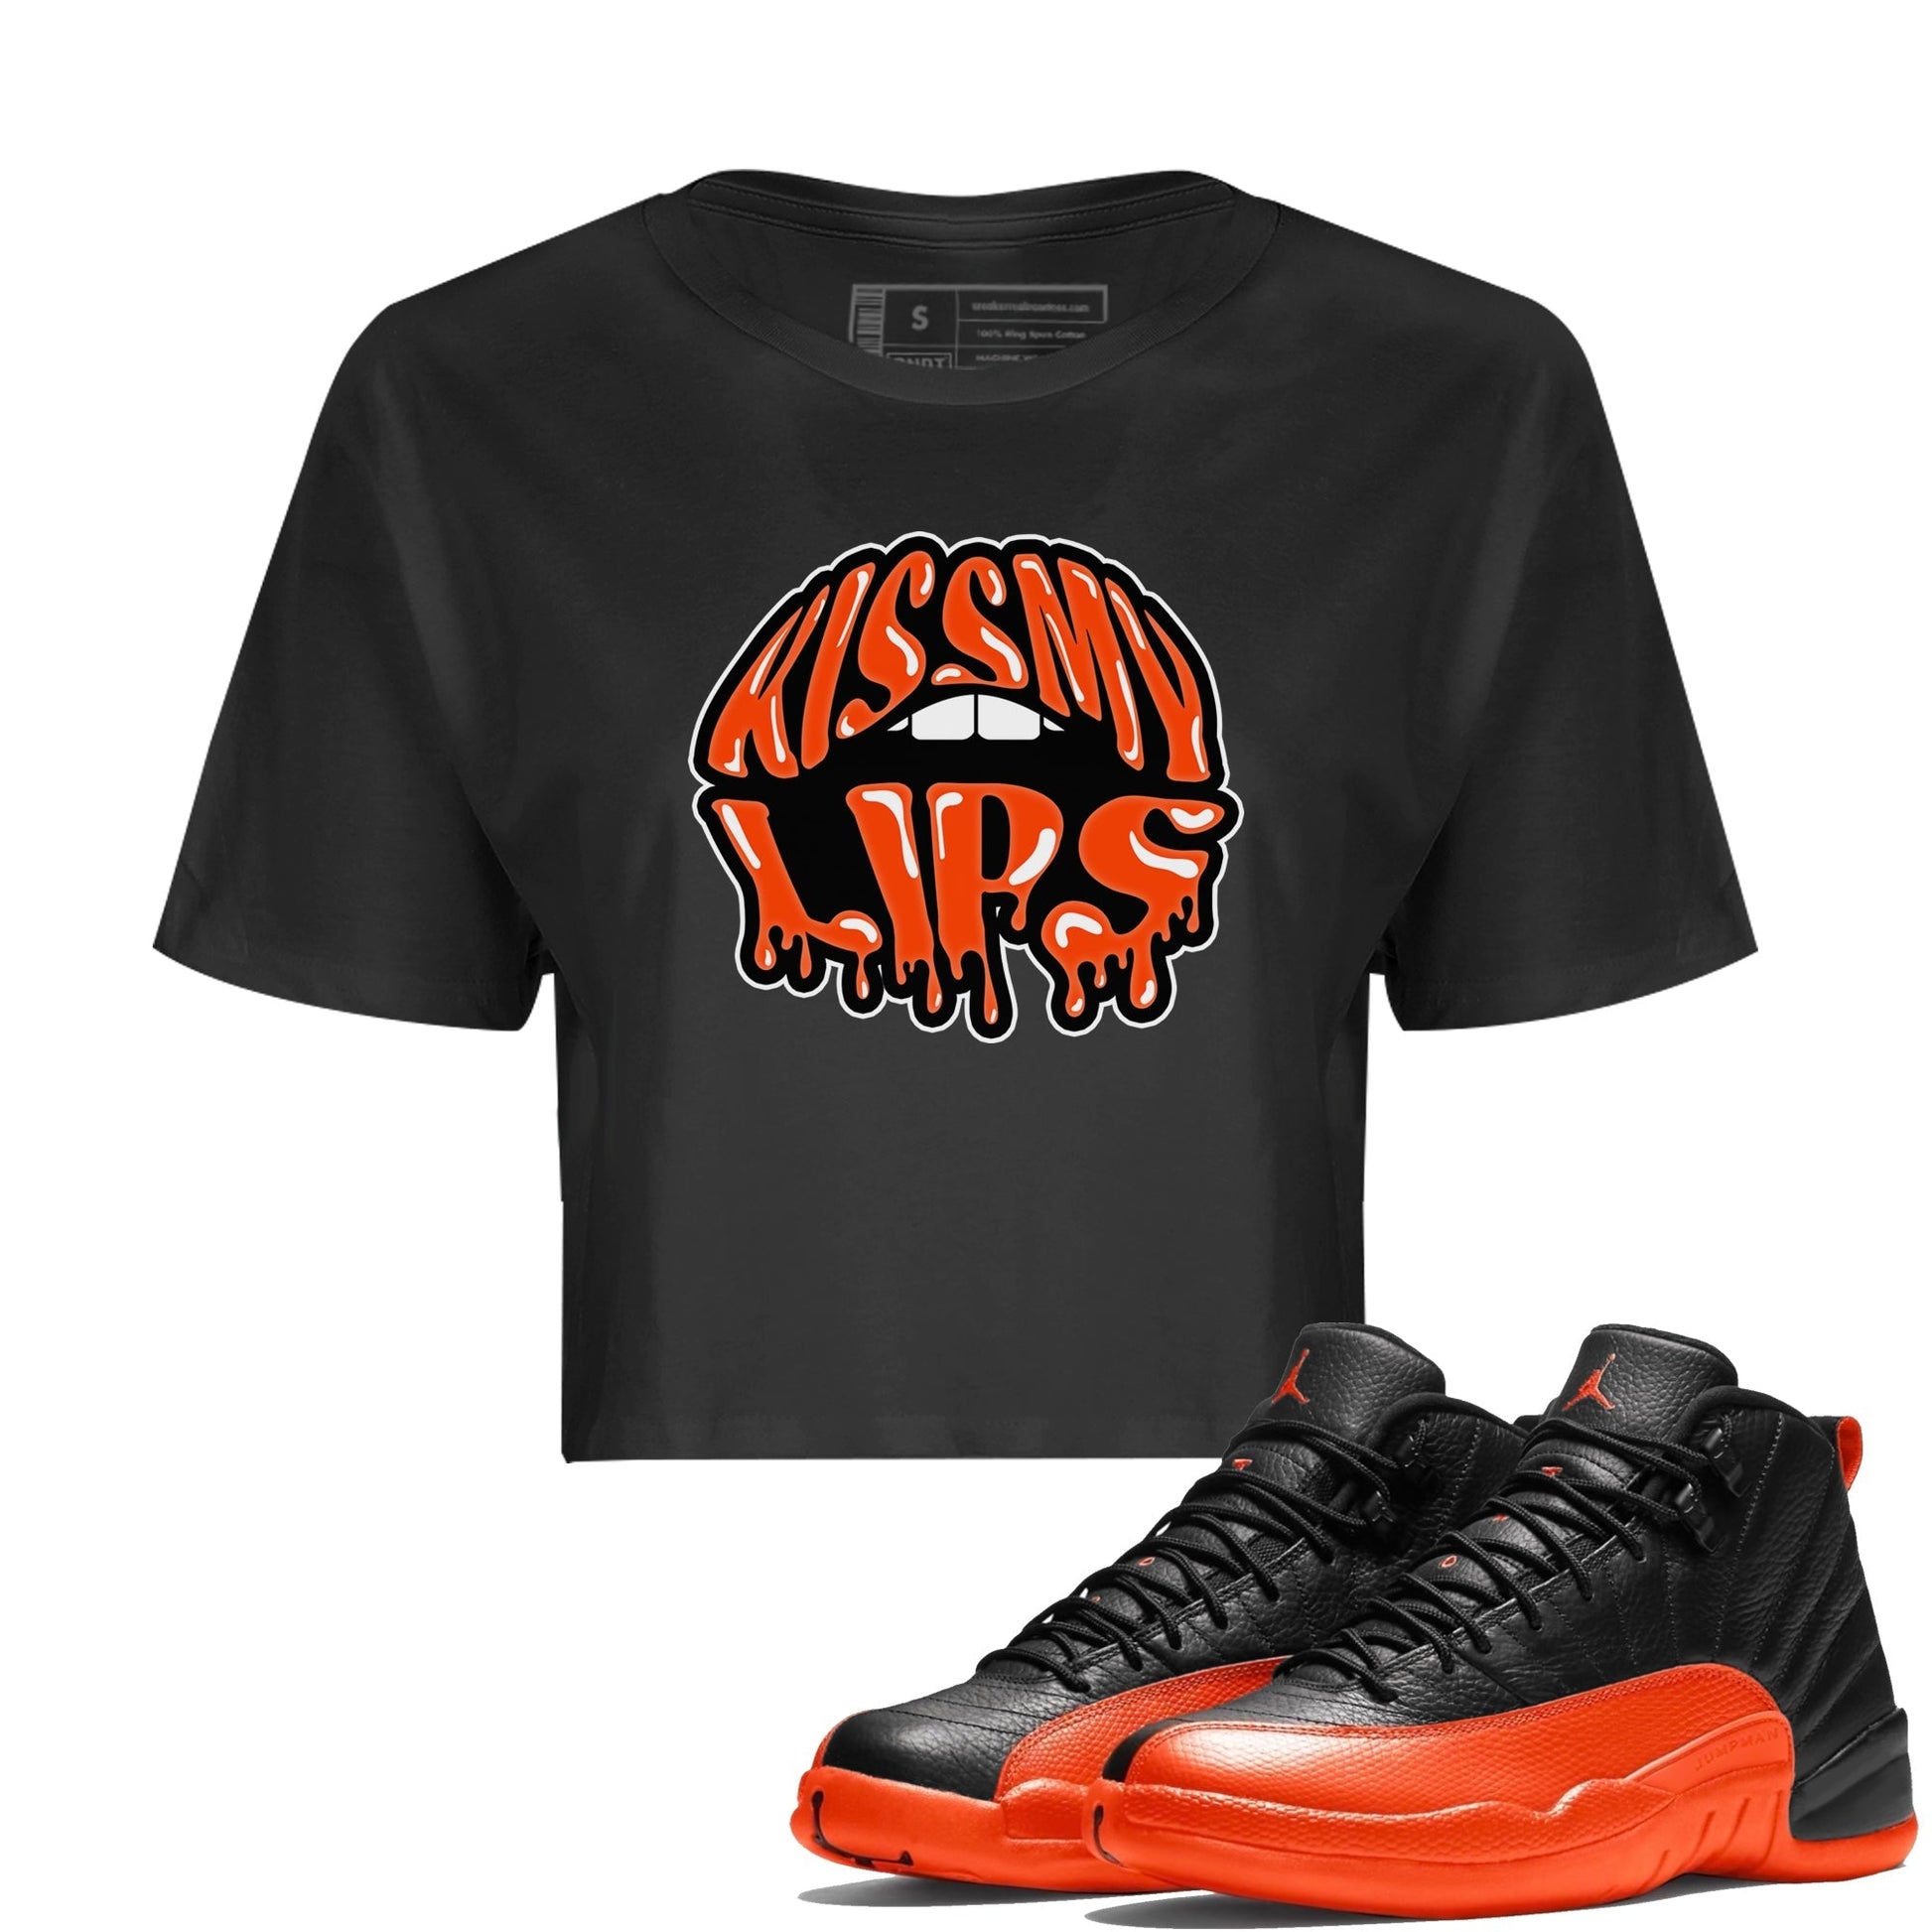 Air Jordan 12 Brilliant Orange Sneaker Match Tees Kiss My Lips Sneaker Tees AJ12 Brilliant Orange Sneaker Release Tees Women's Shirts Black 1